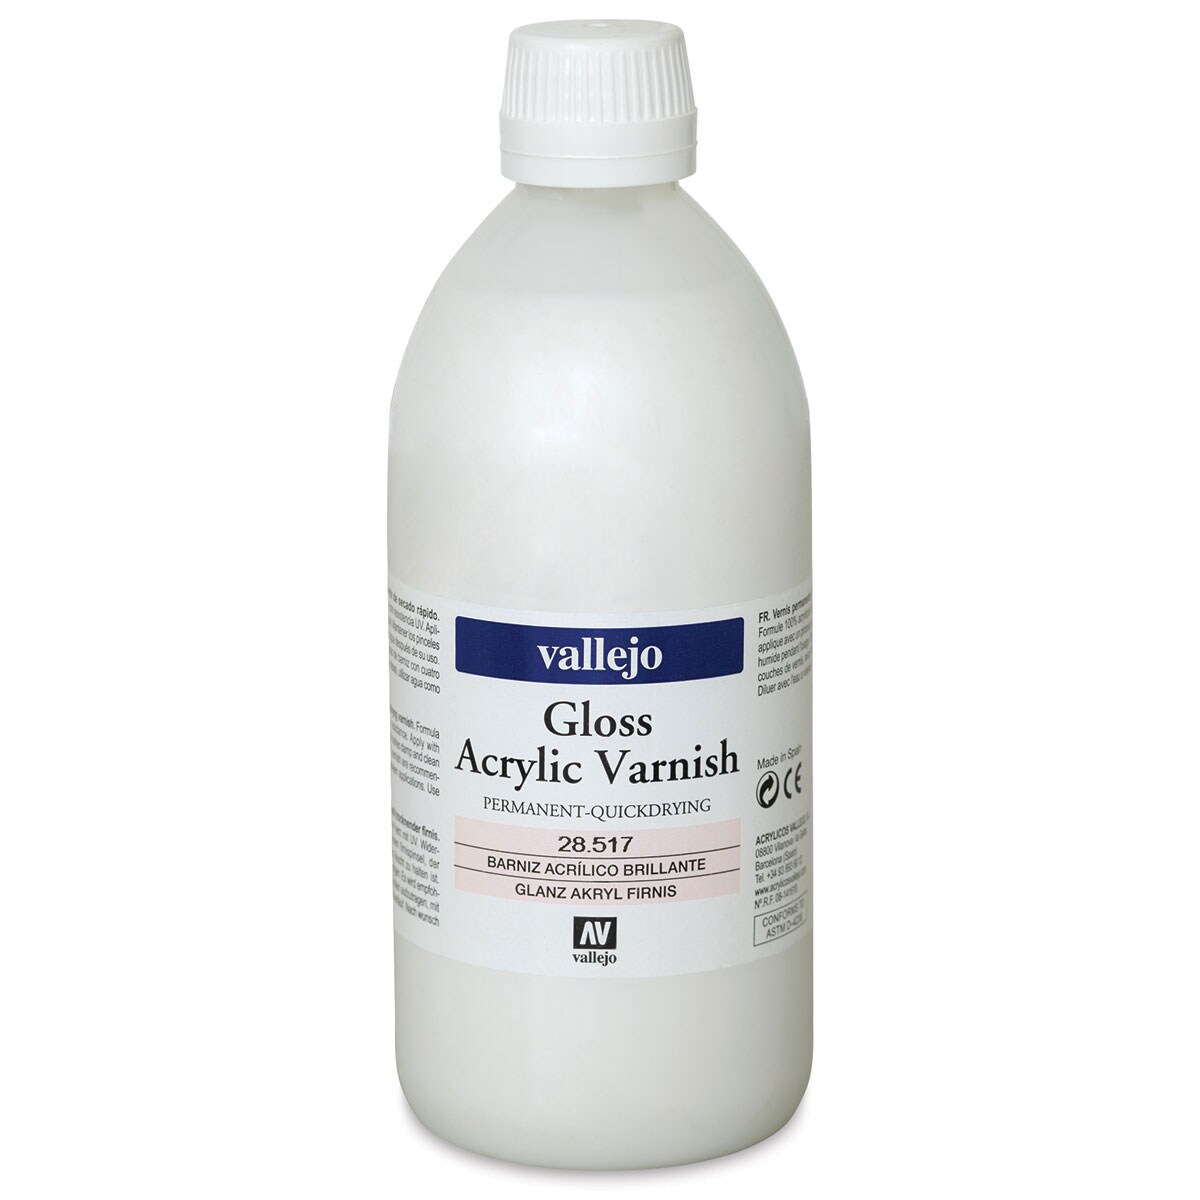 Vallejo Permanent Acrylic Varnish - Gloss, 500 ml